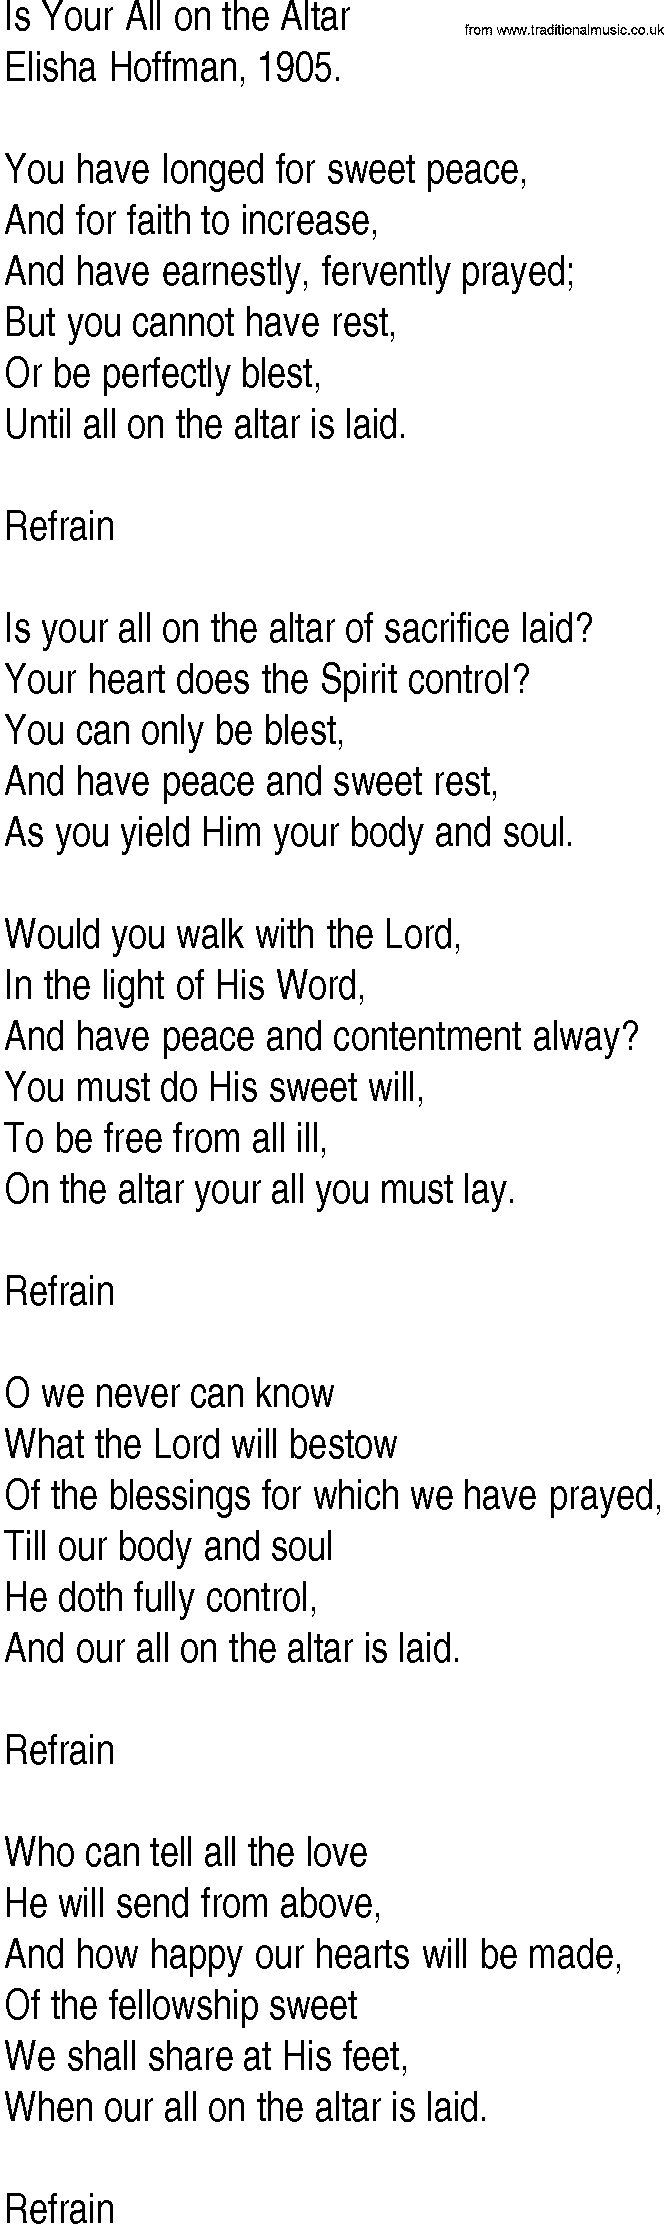 Hymn and Gospel Song: Is Your All on the Altar by Elisha Hoffman lyrics